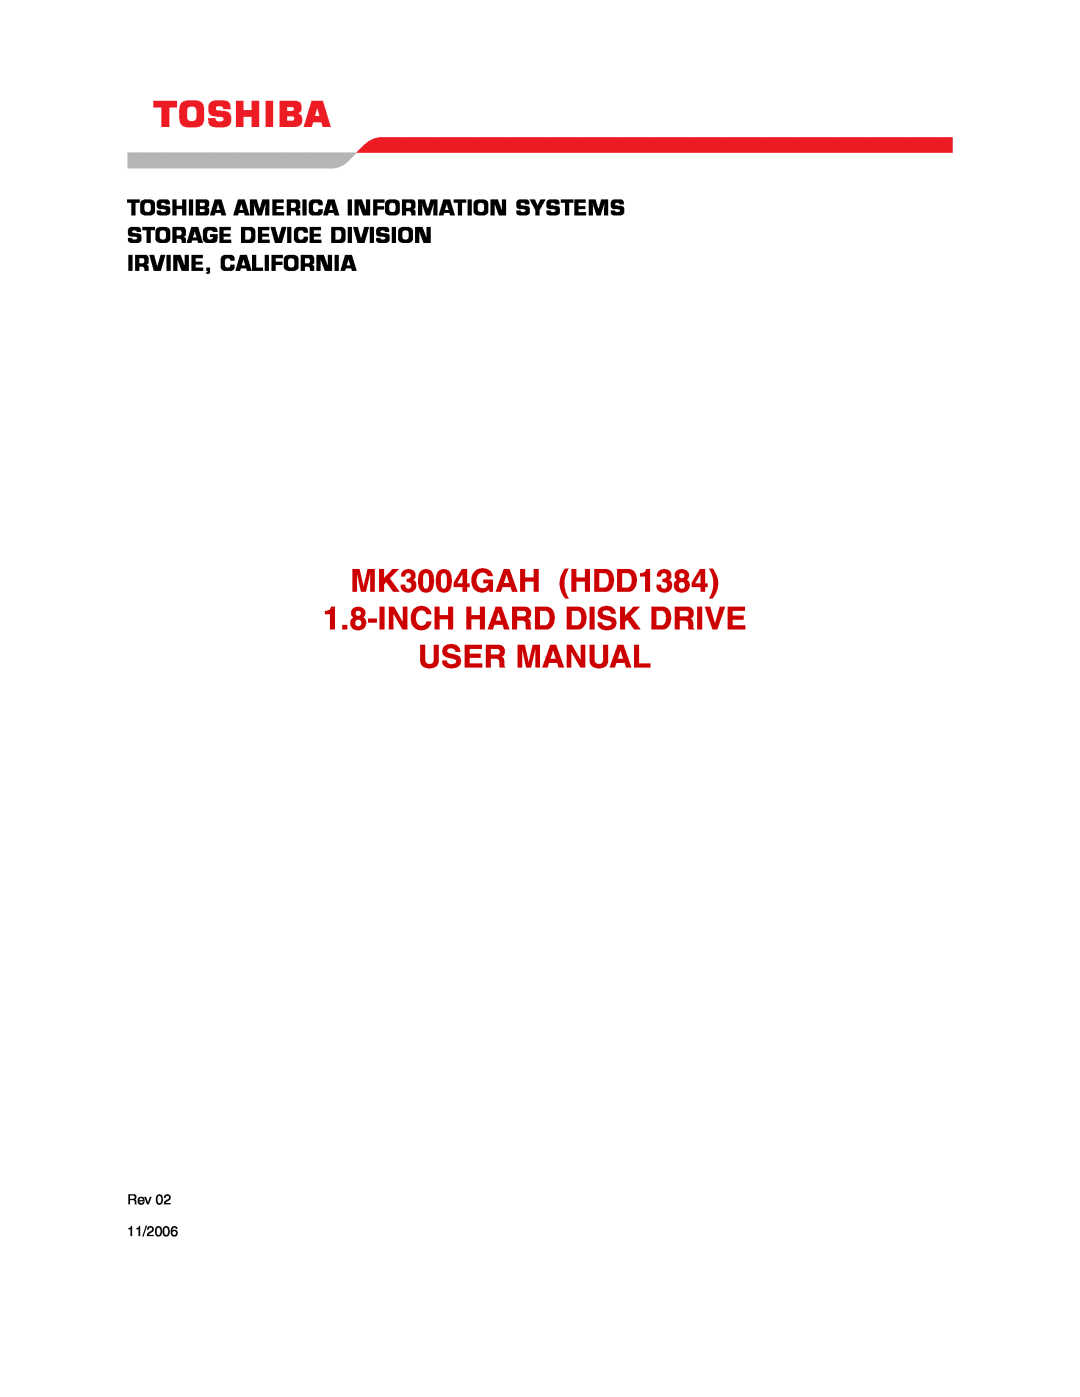 Toshiba MK3004GAH user manual Toshiba America Information Systems Storage Device Division, Irvine, California, Rev 11/2006 